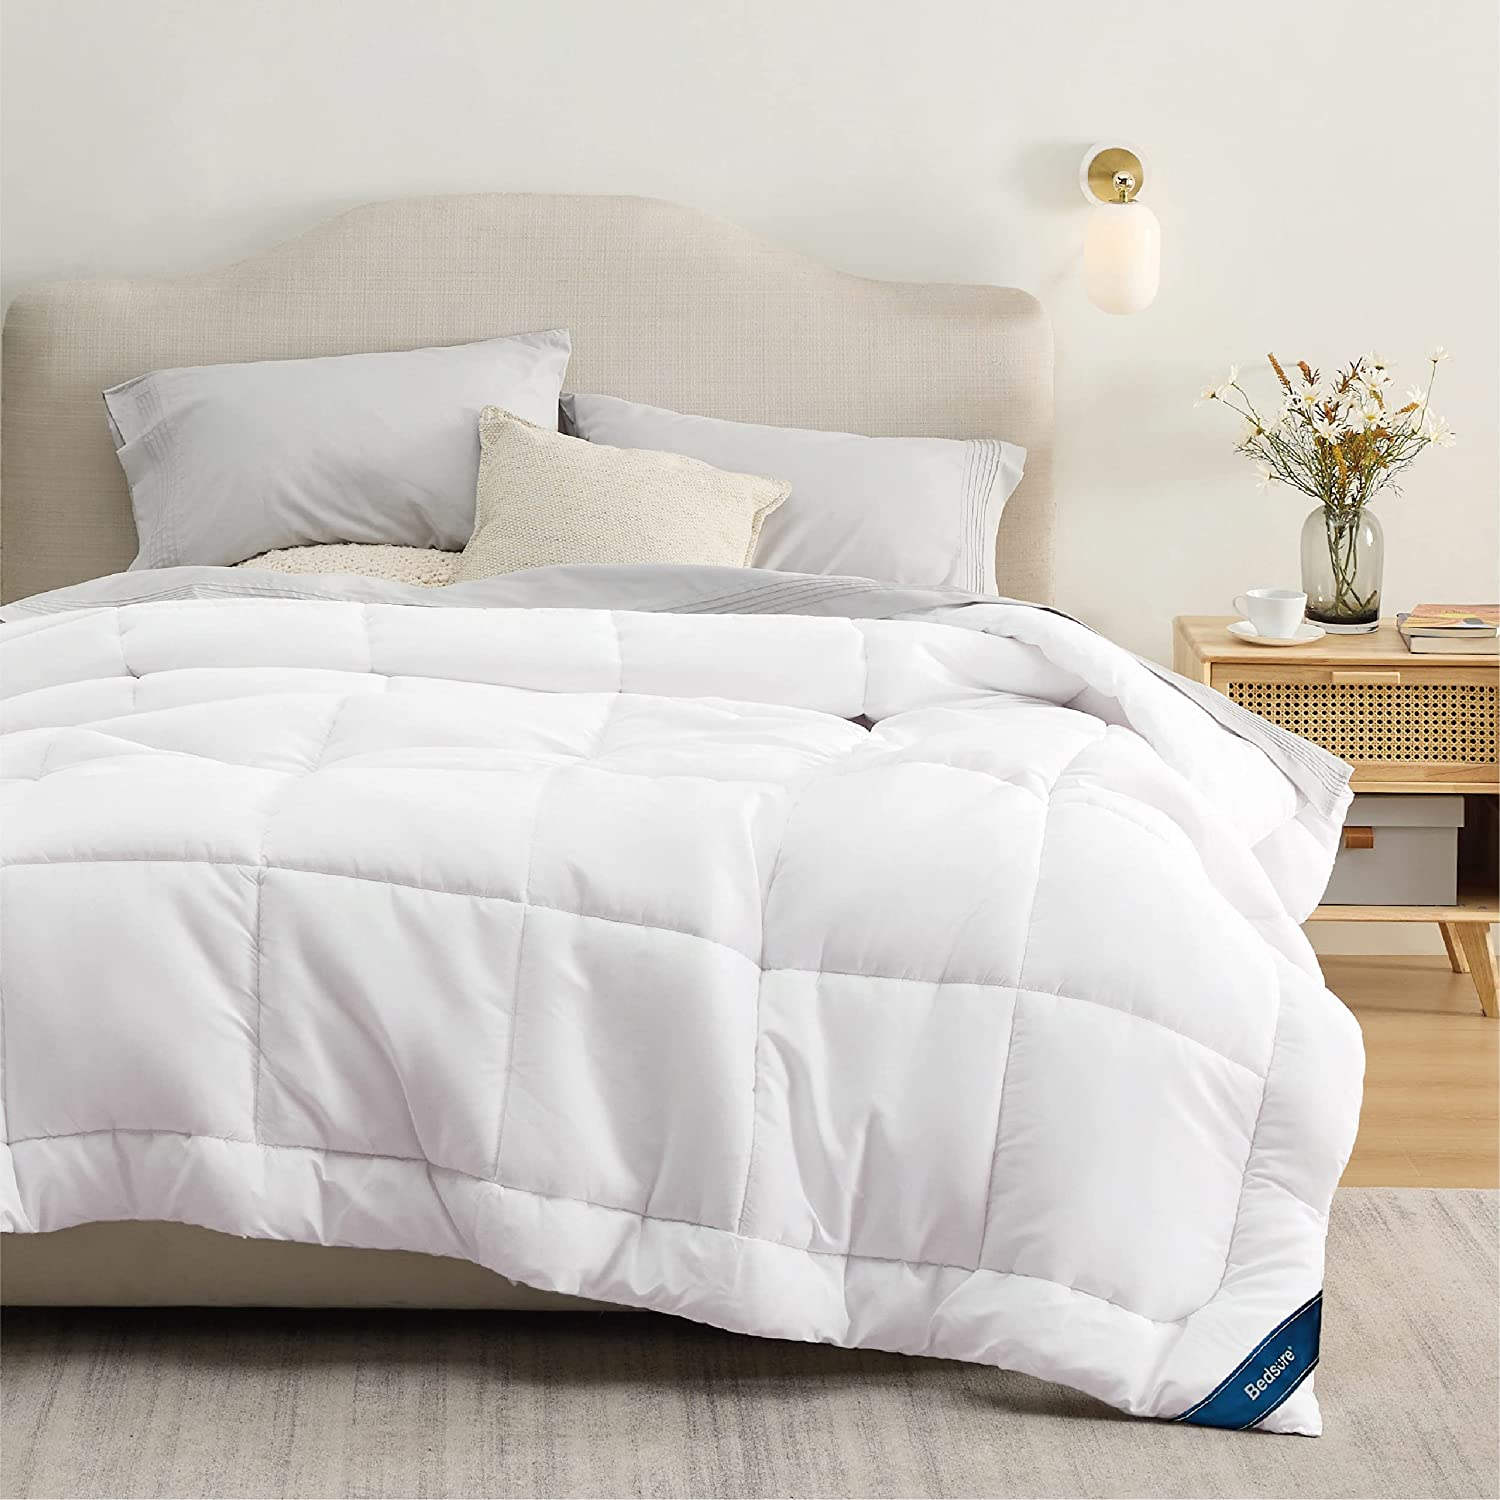 Utopia Bedding Down Alternative Comforter (King, White) - All